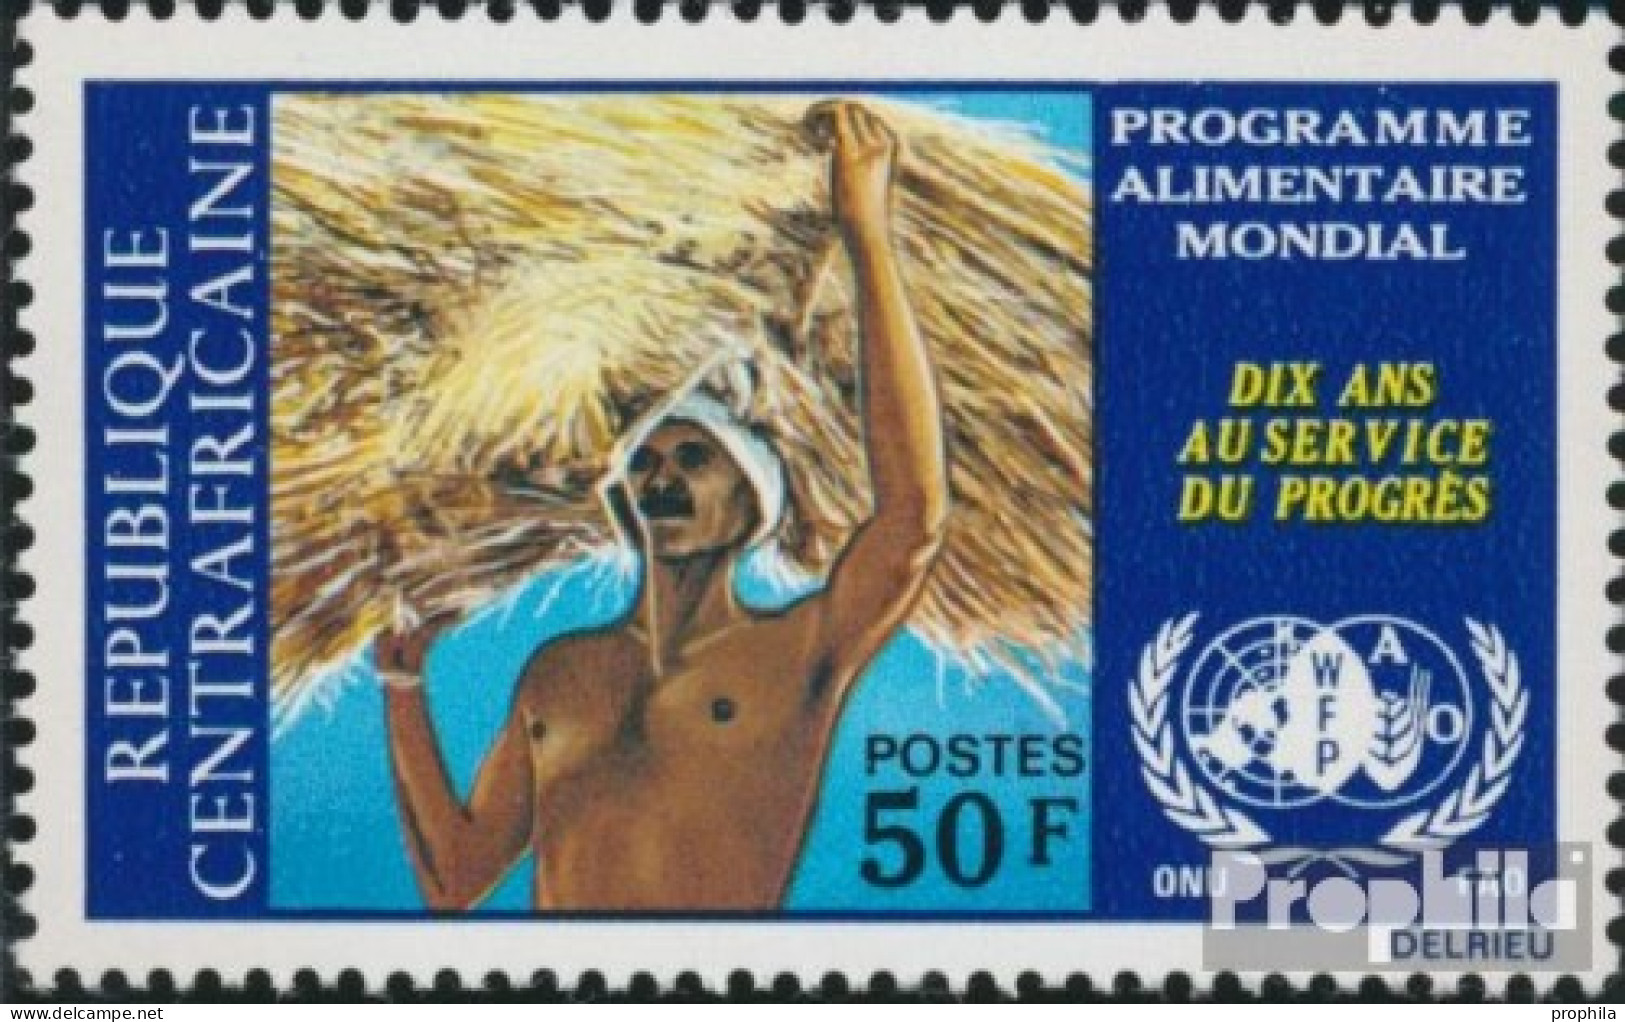 Zentralafrikanische Republik 311 (kompl.Ausg.) Postfrisch 1973 Welternährungsprogramm - República Centroafricana